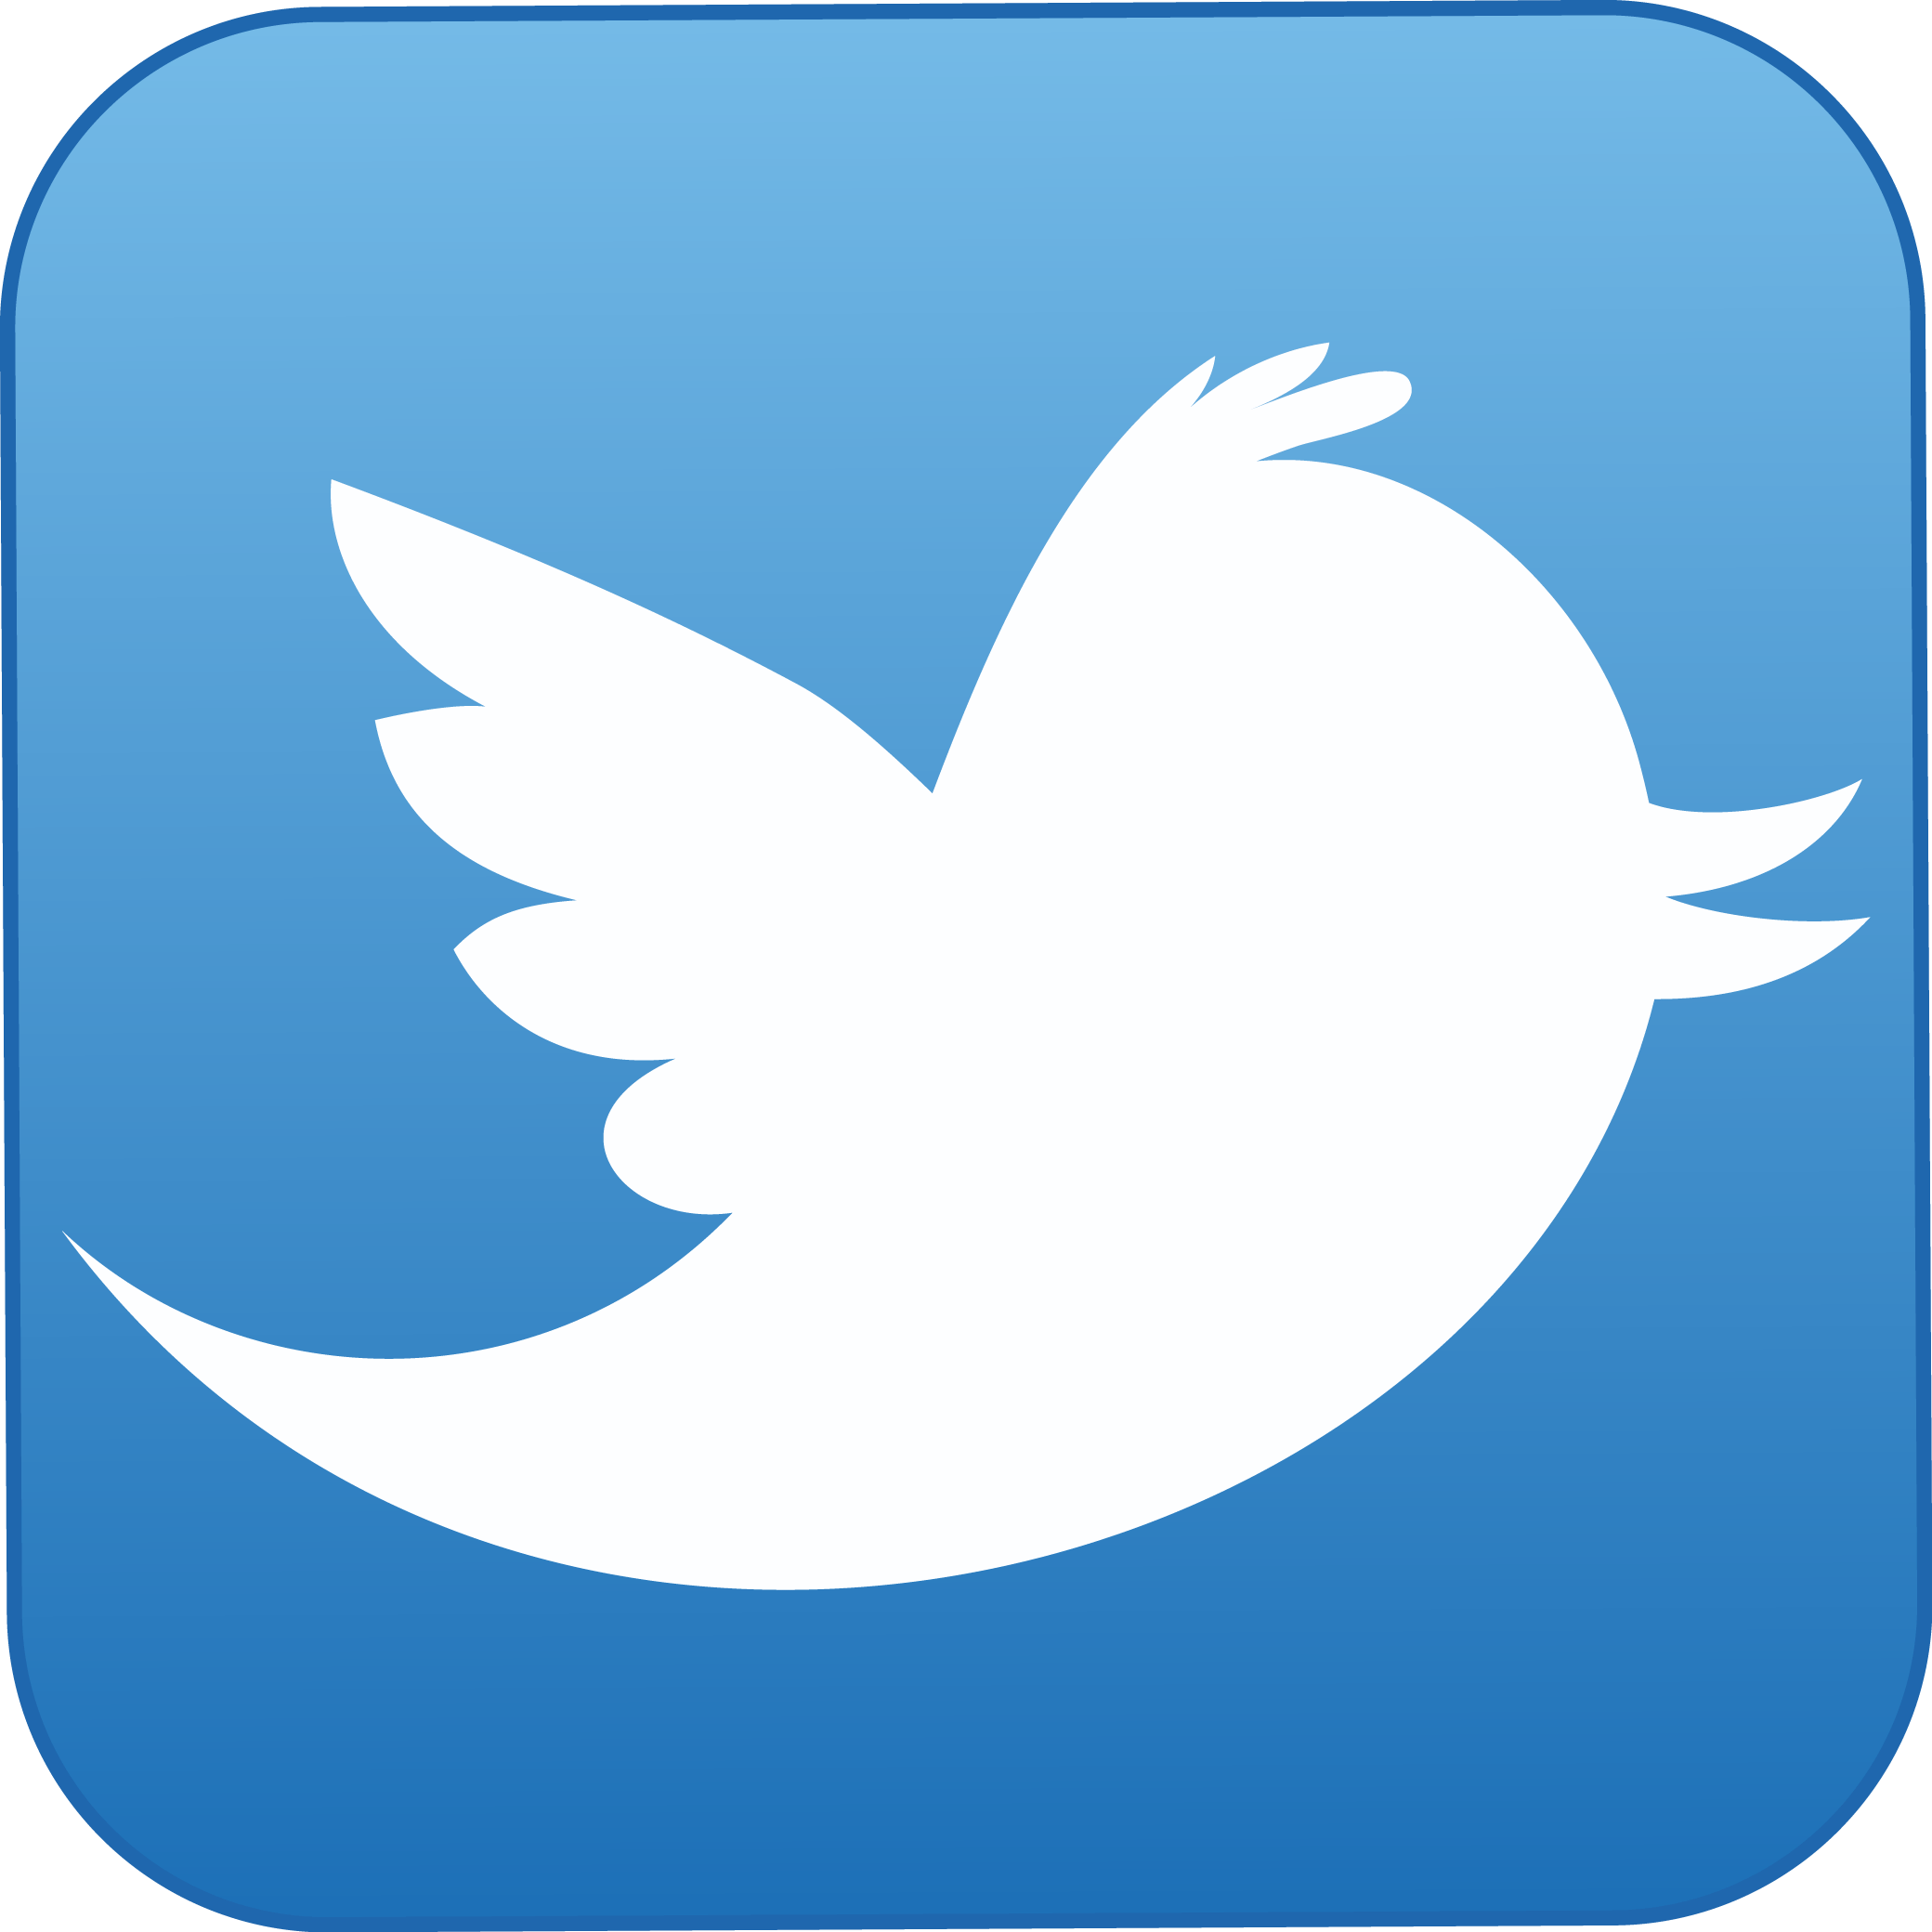 Twitter Logo - Twitter logo PNG images free download